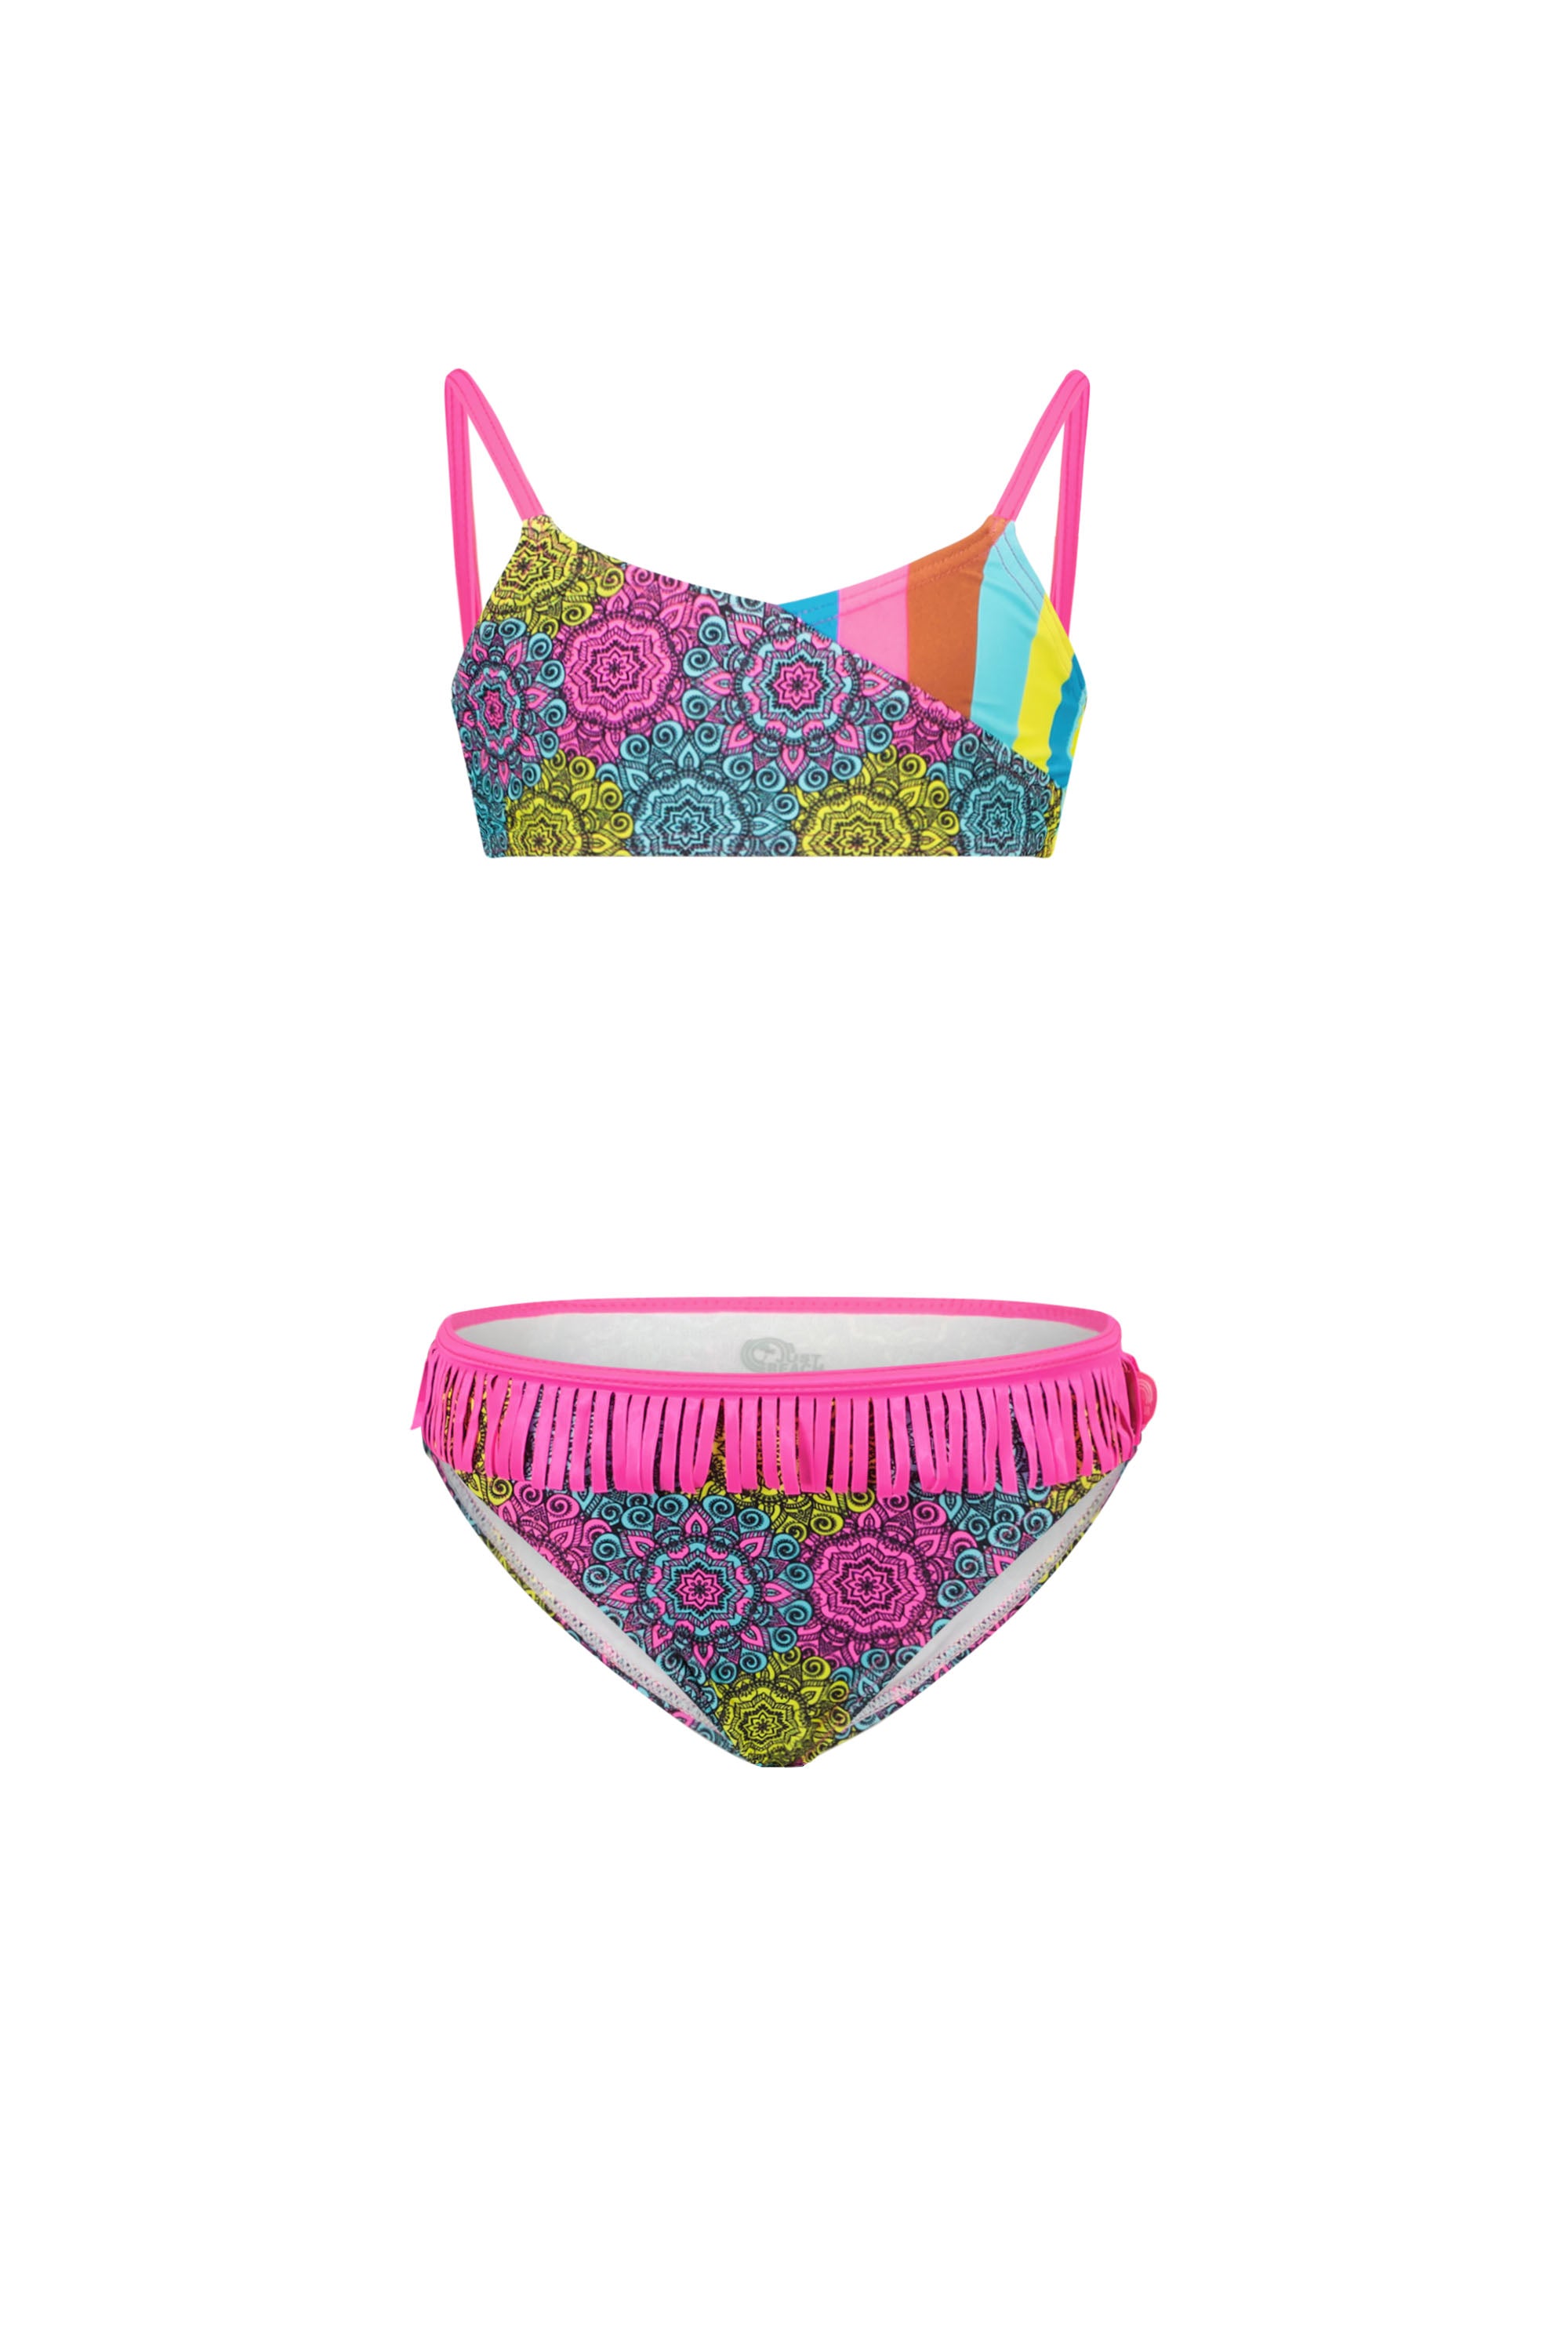 Just Beach Girls boho lemon bikini with fringe details on pants